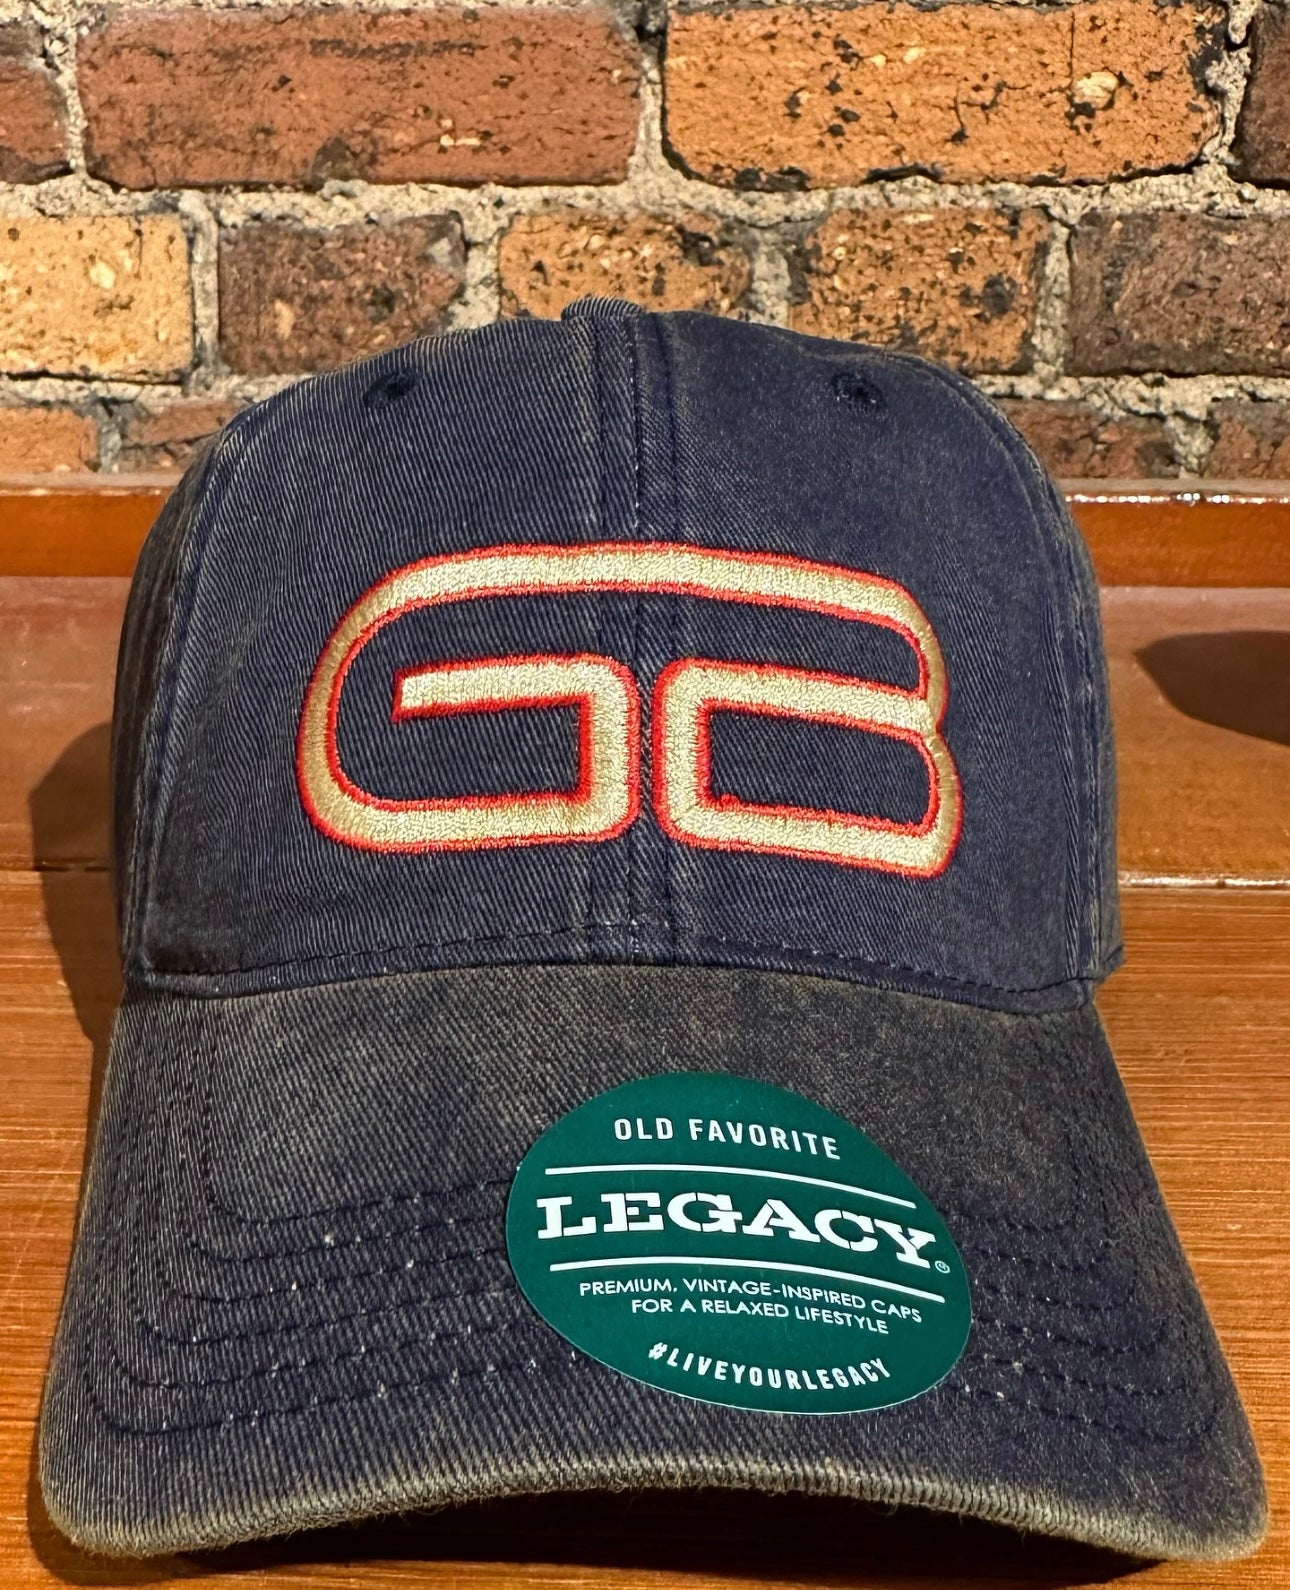 Greenville Braves 'GB' Hat - Legacy